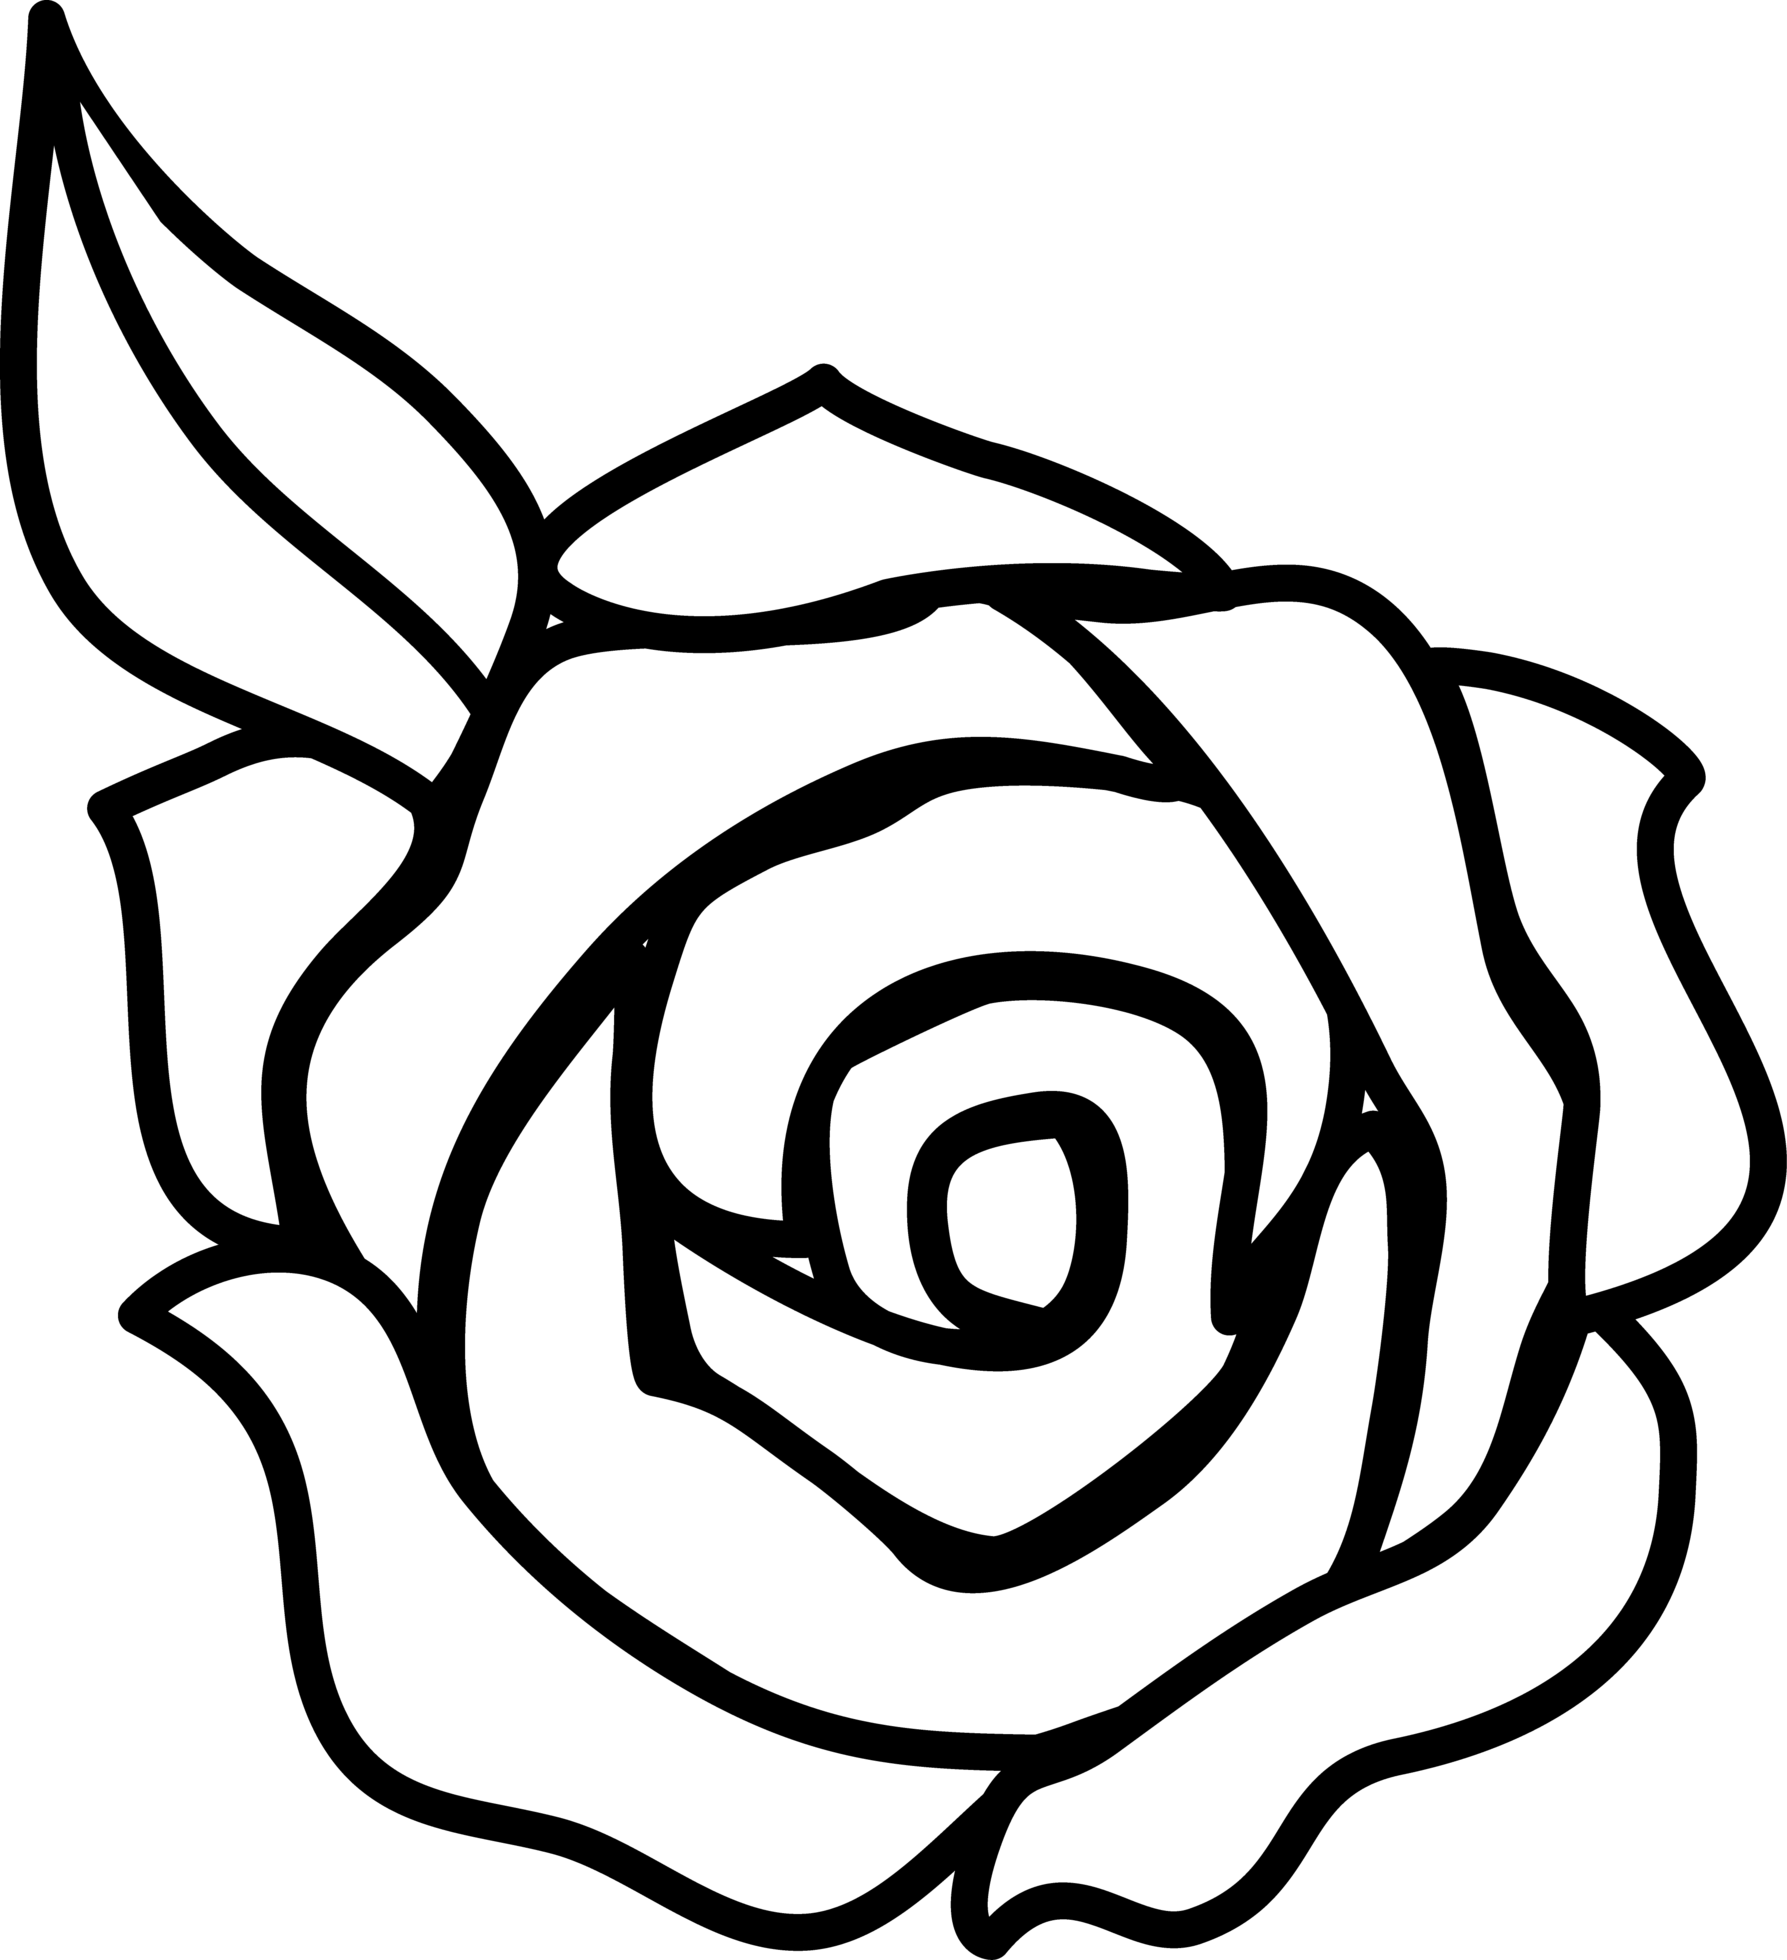 Simple Rose Drawing - Gallery